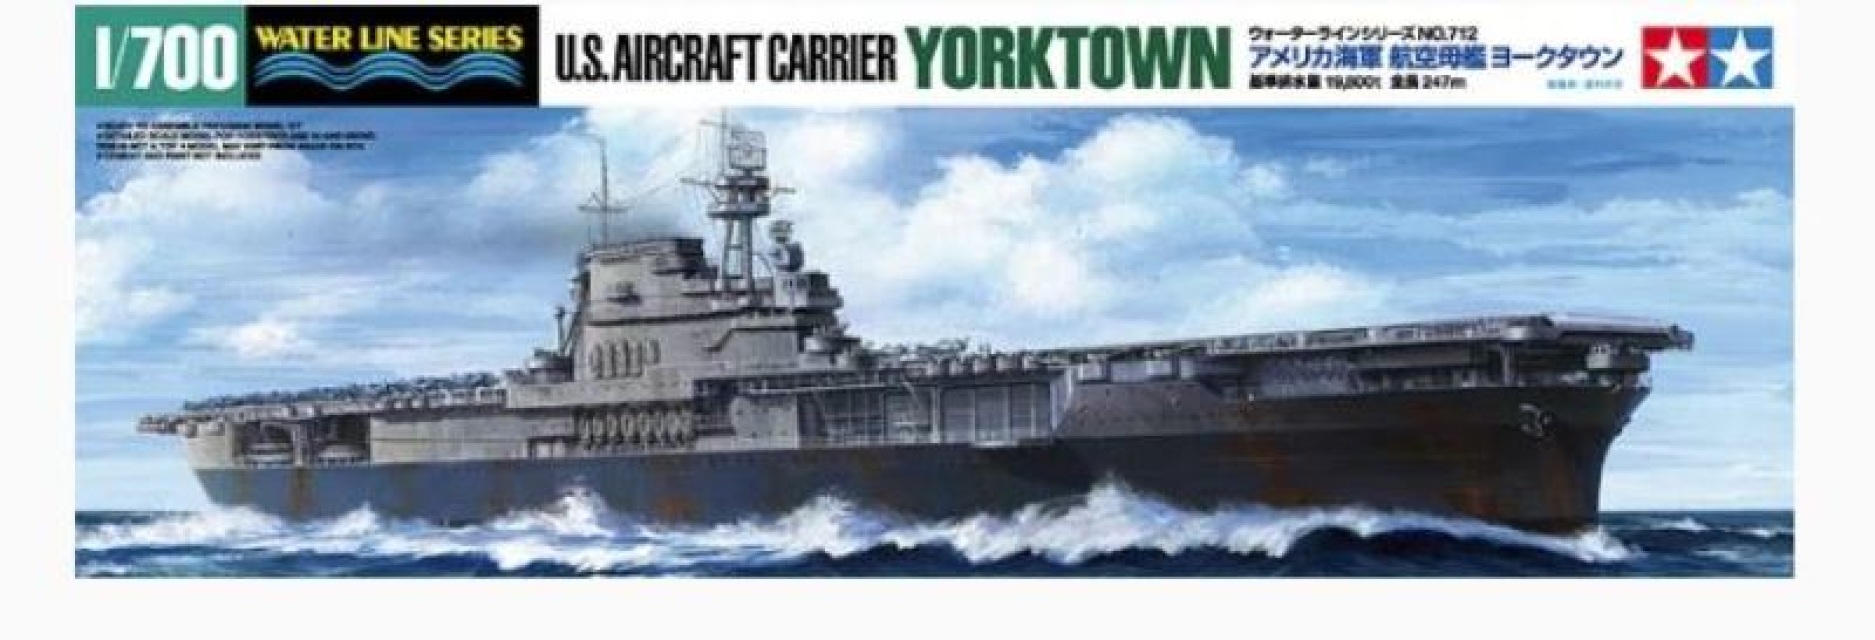 Tamiya 1/700 Water Line Series No.712 US Navy Aircraft Carrier Yorktown 31712 for sale online